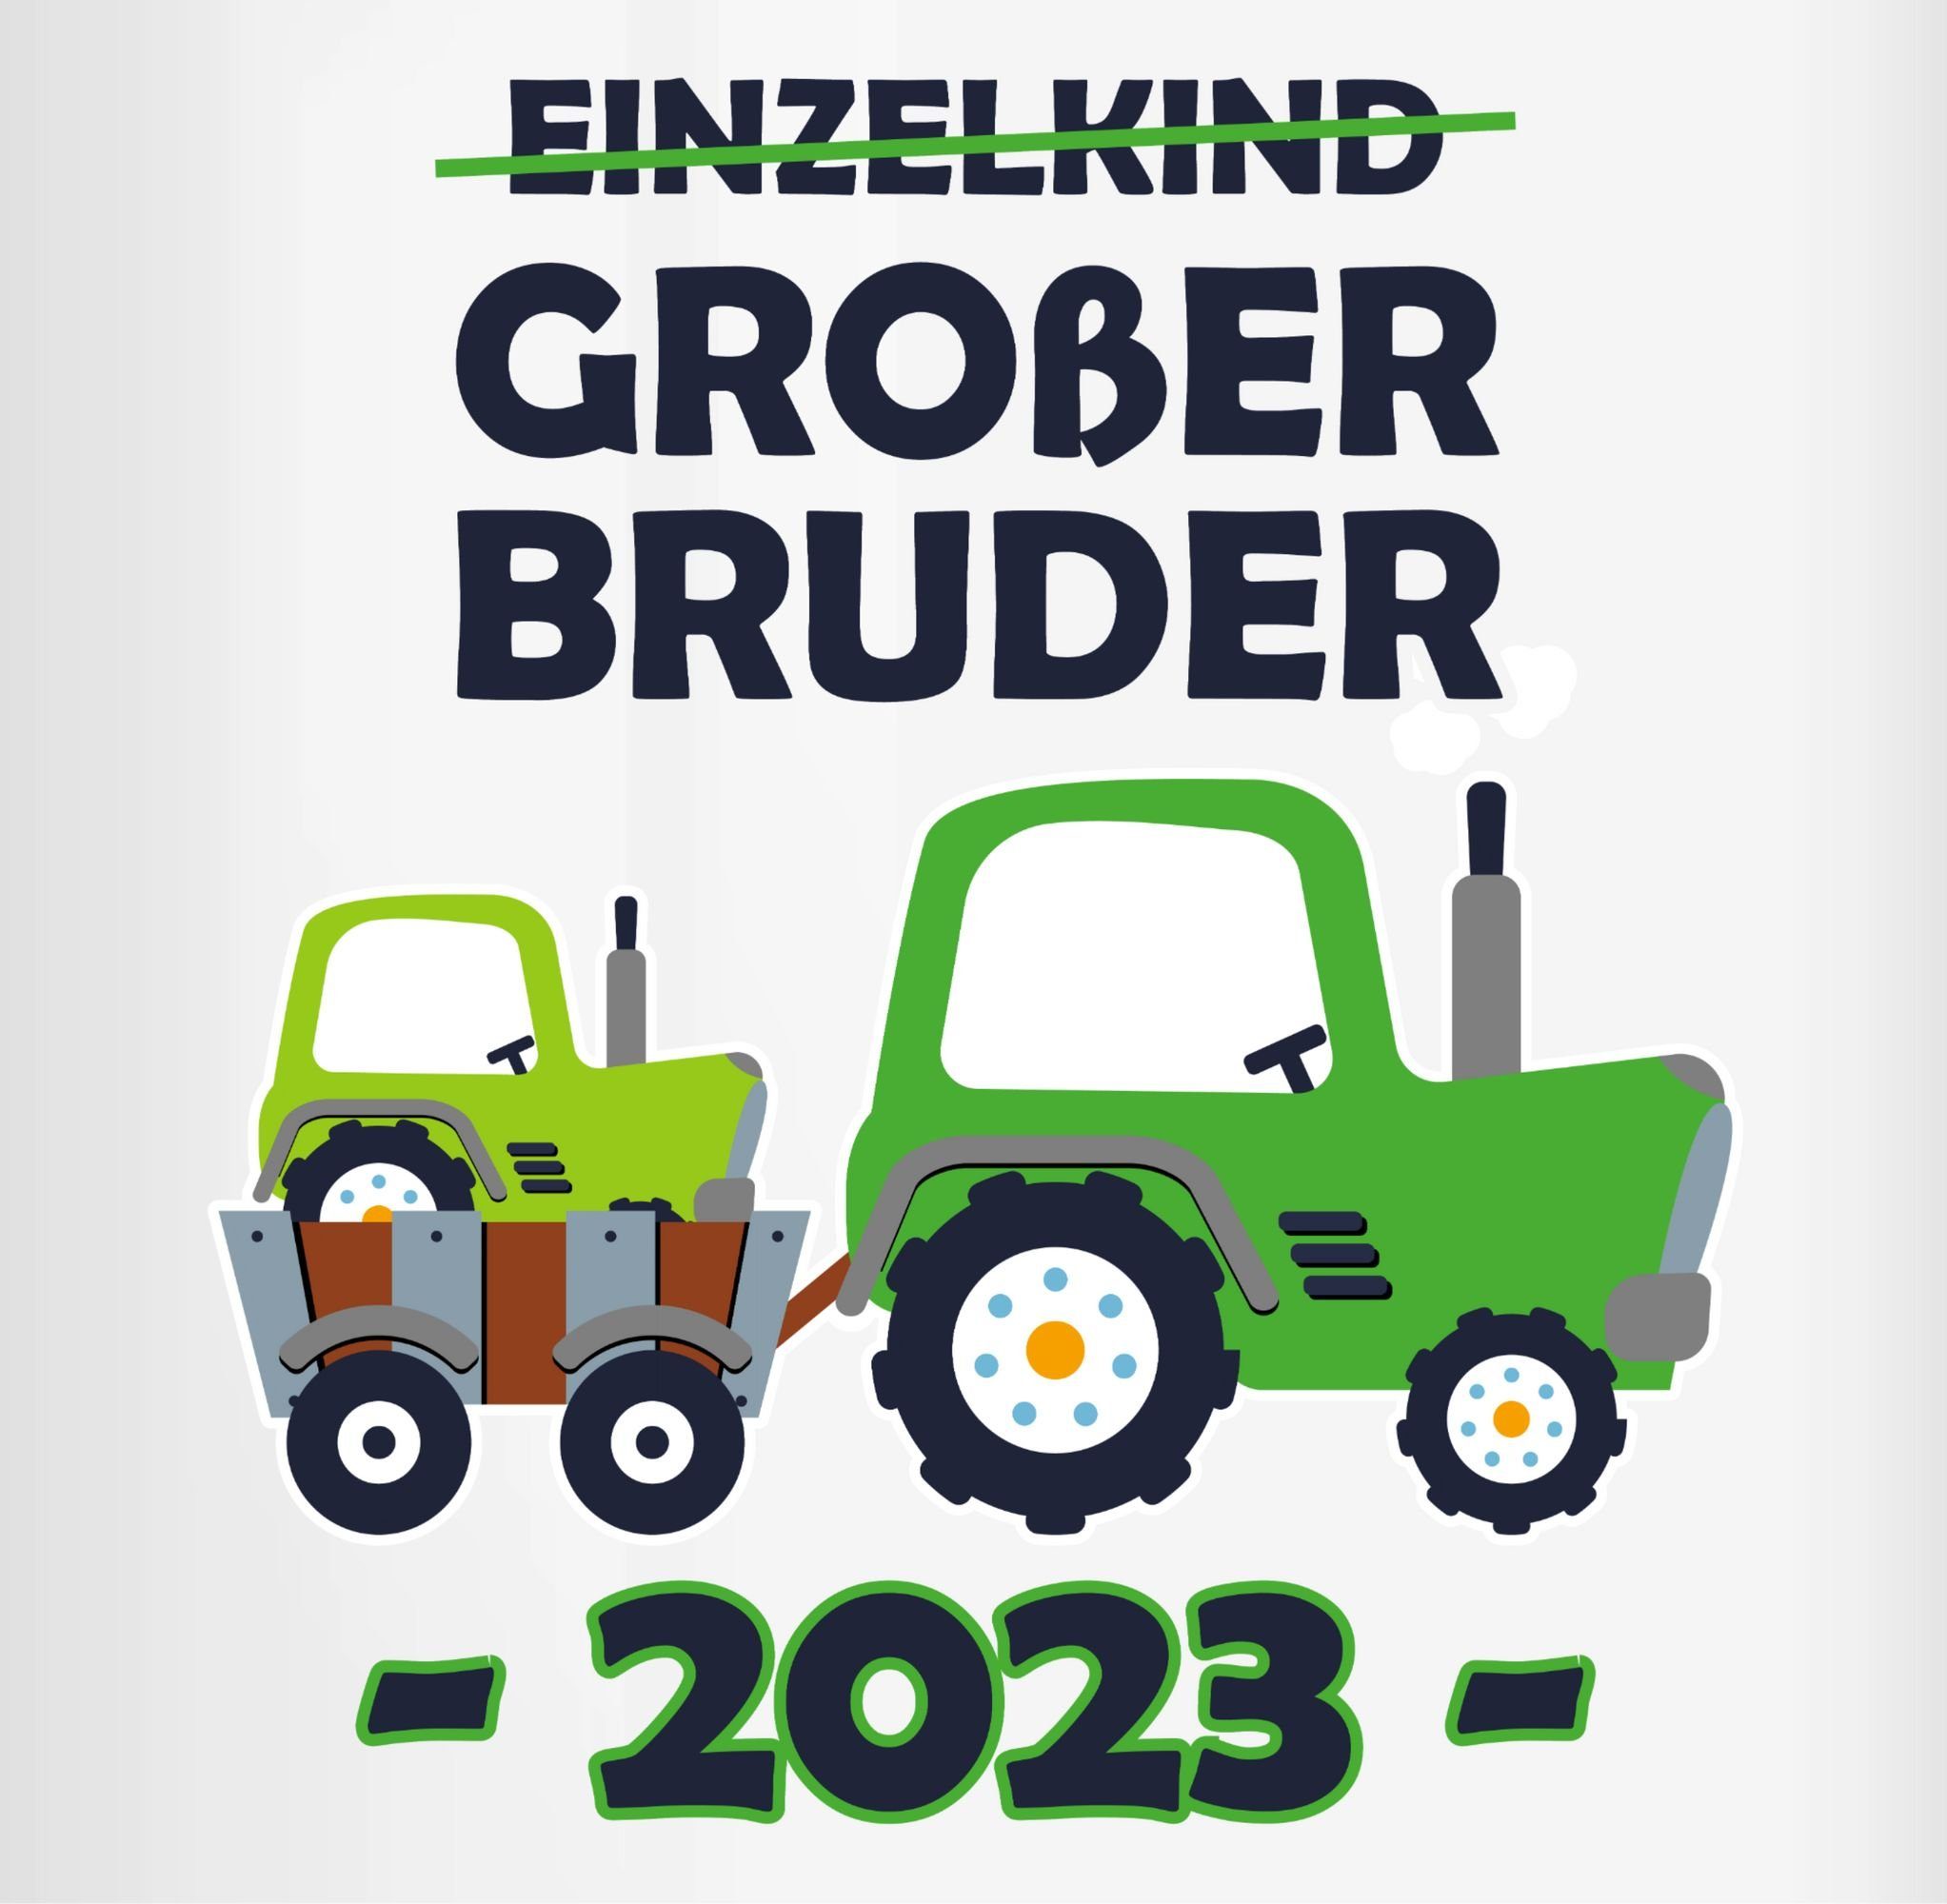 Keramik, Einzelkind Bruder Traktor, Großer Großer 1 Tasse 2023 Dunkelblau Shirtracer Bruder